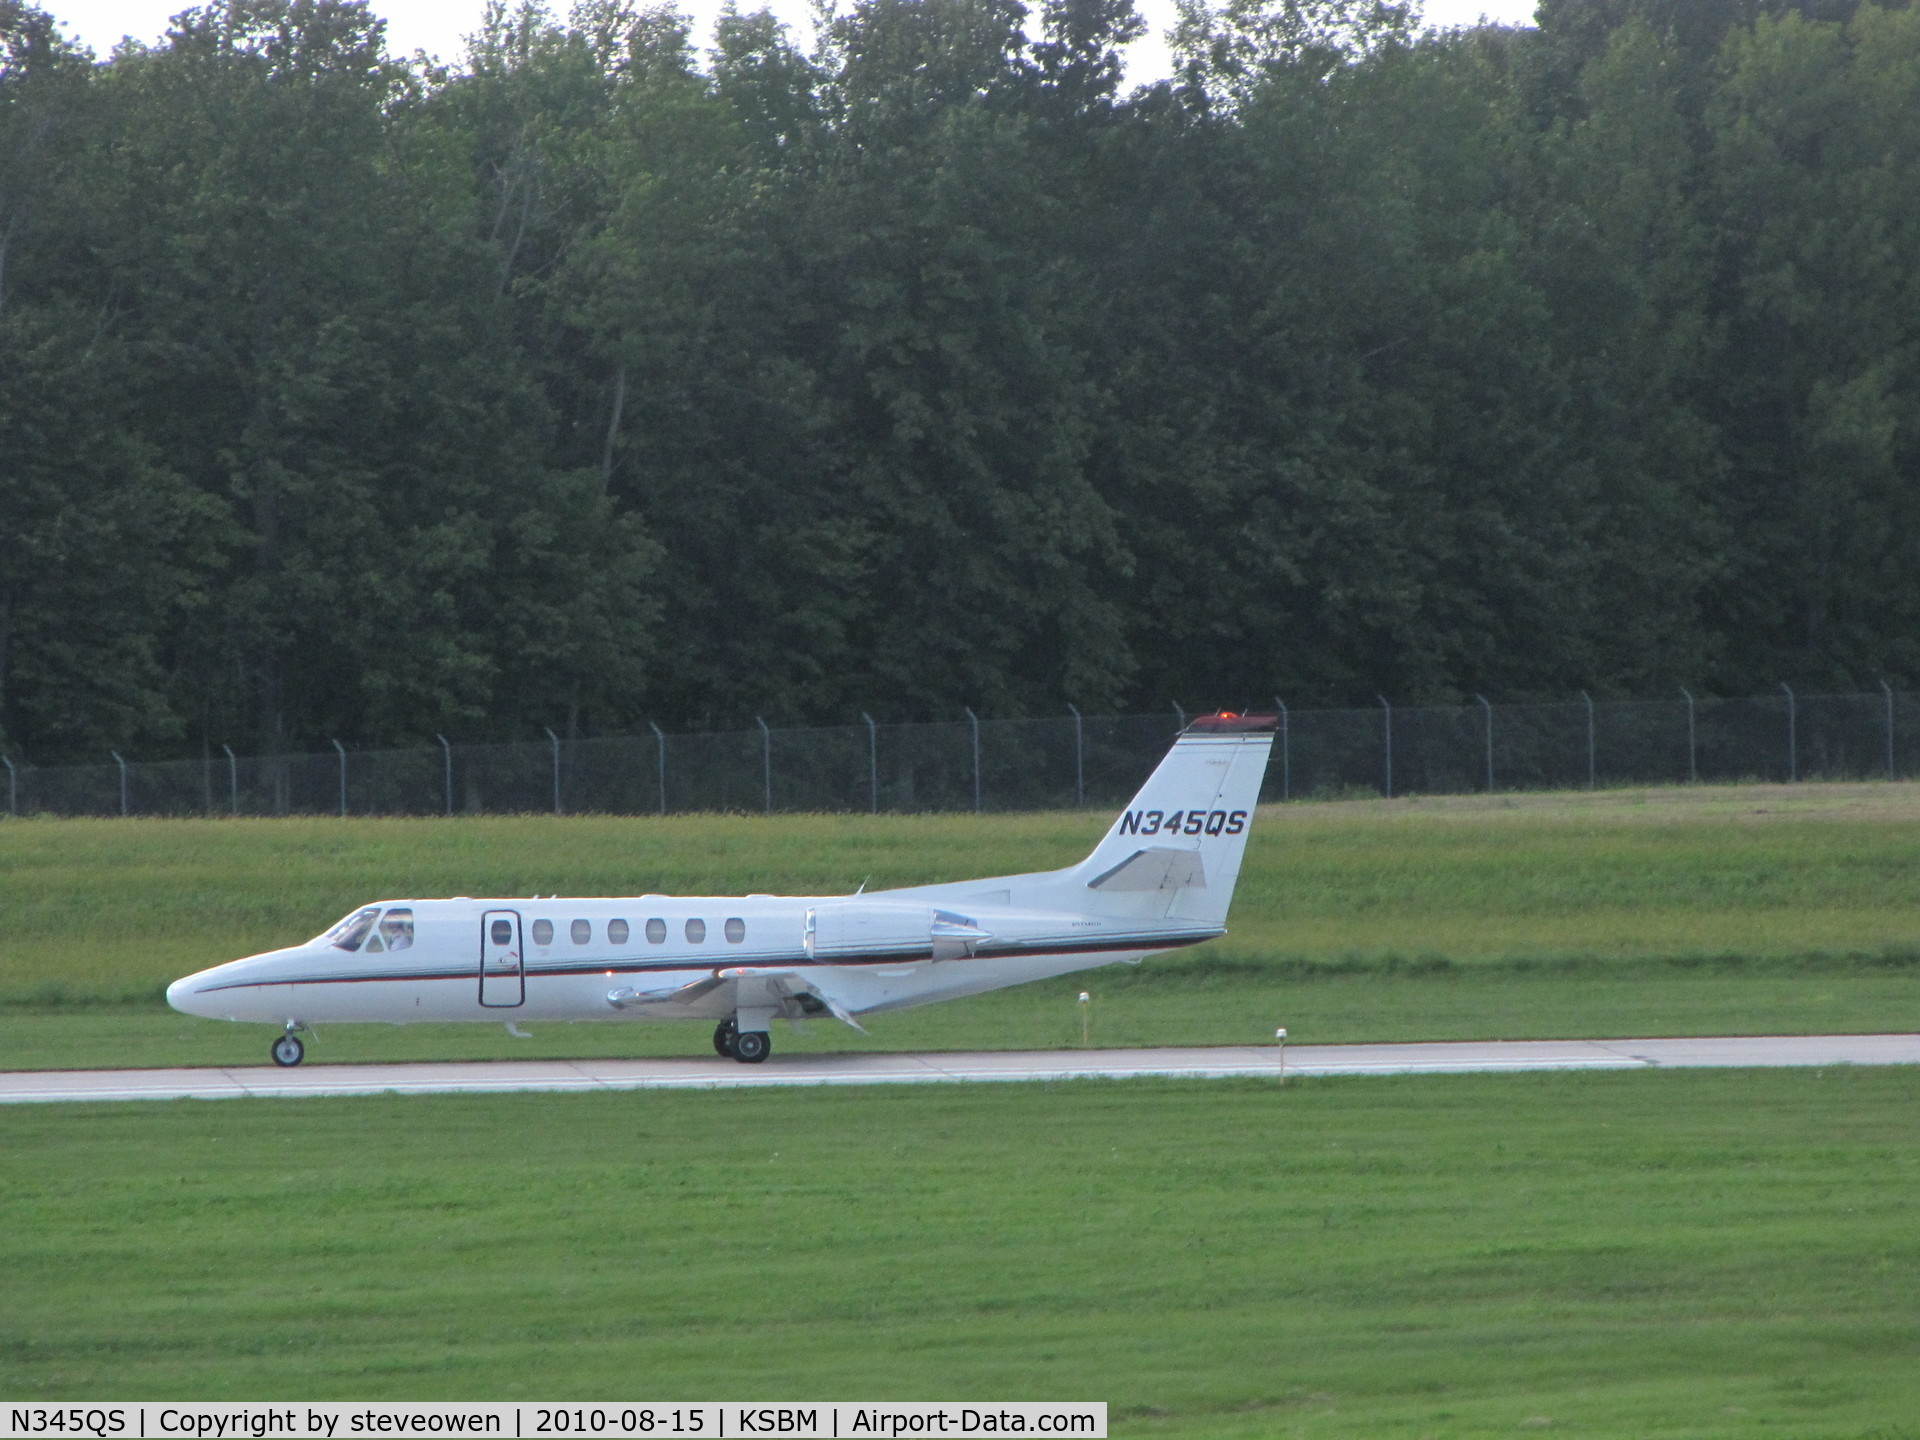 N345QS, 1997 Cessna 560 C/N 560-0445, landing at KSBM during the PGA Tour